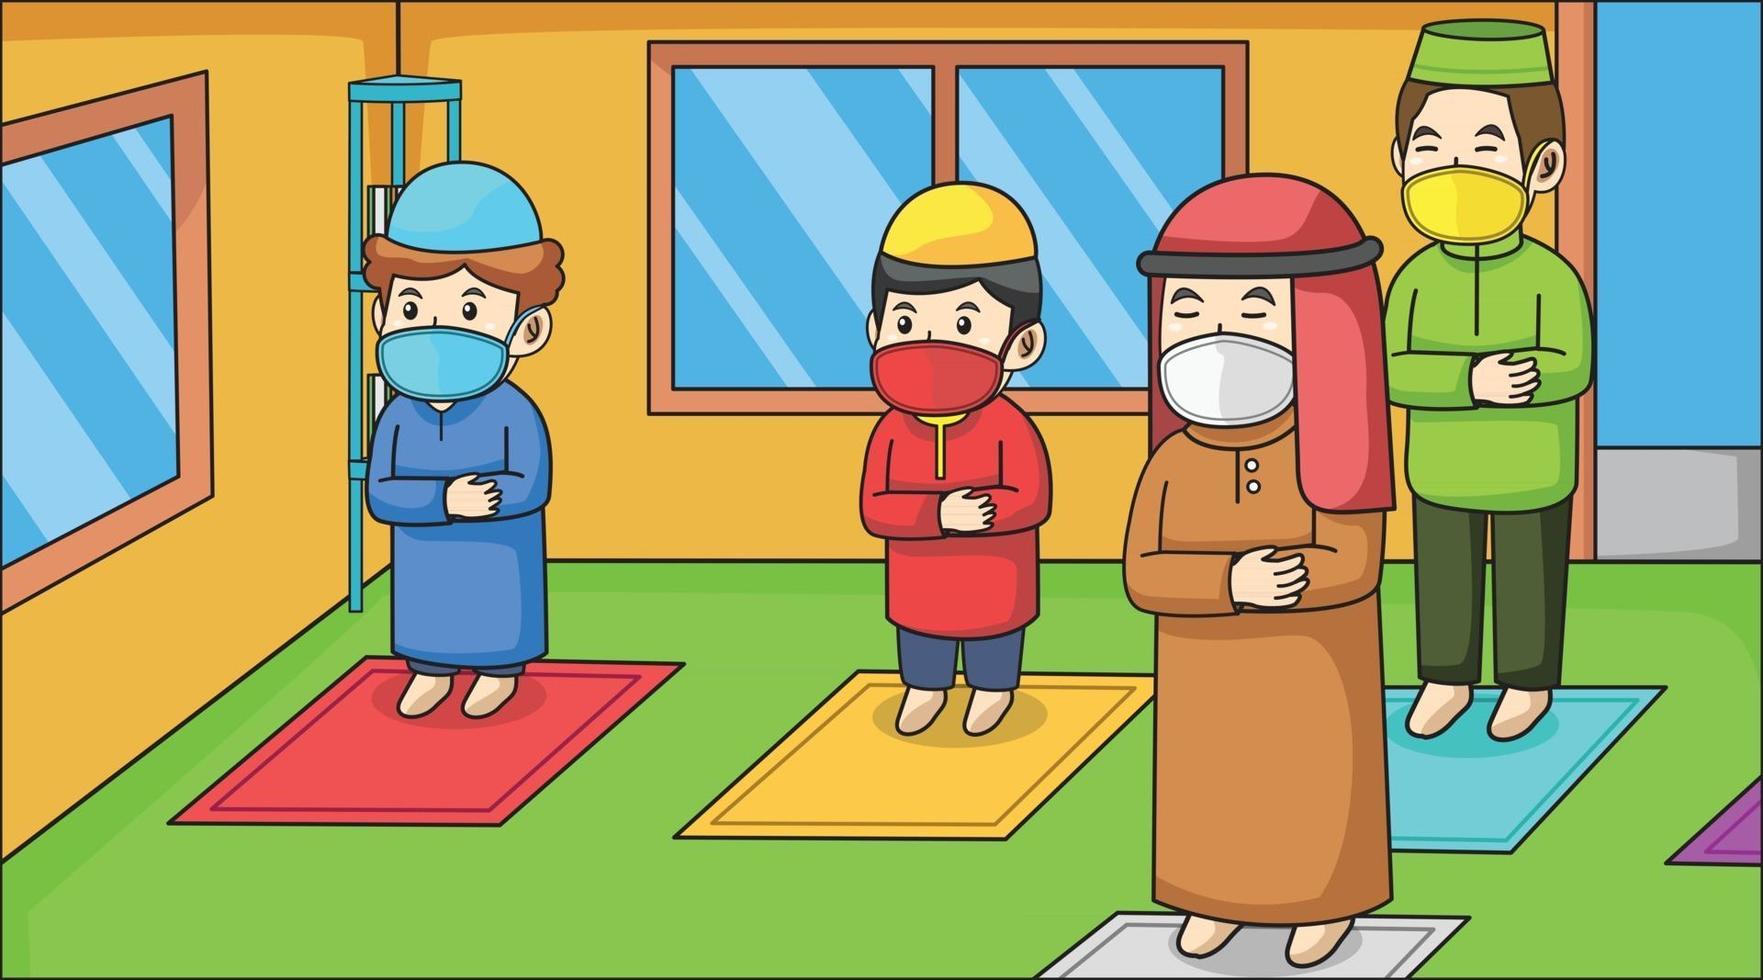 During the corona virus pandemic,muslim inside mosque ,in ramadan month.Muslim praying tarawih together,makmum and imam,using masks and health protocols.children book illustration. vector